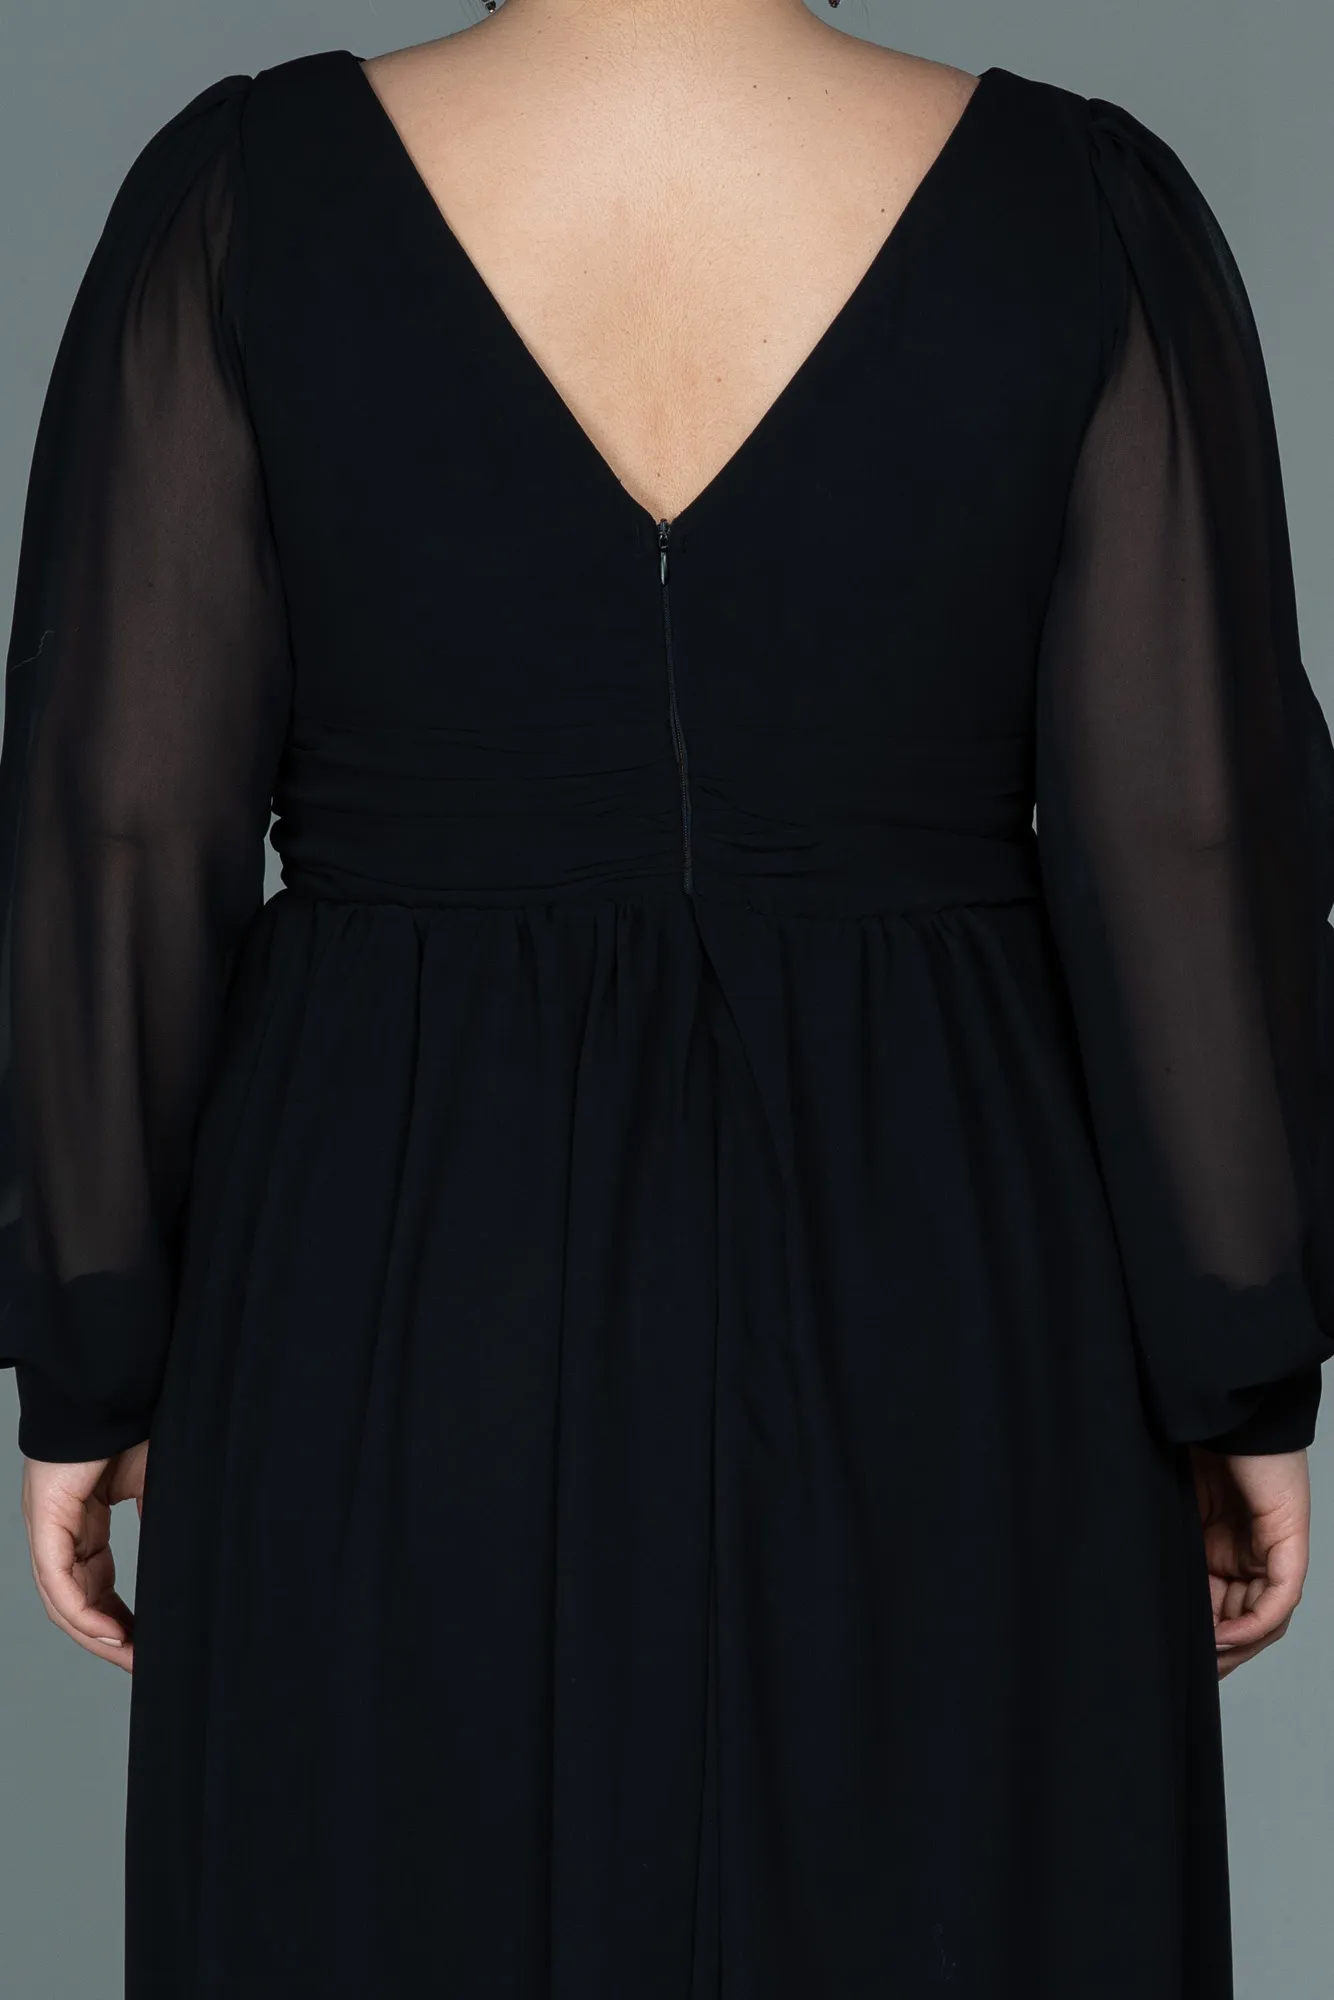 Black-Midi Chiffon Plus Size Evening Dress ABK1565